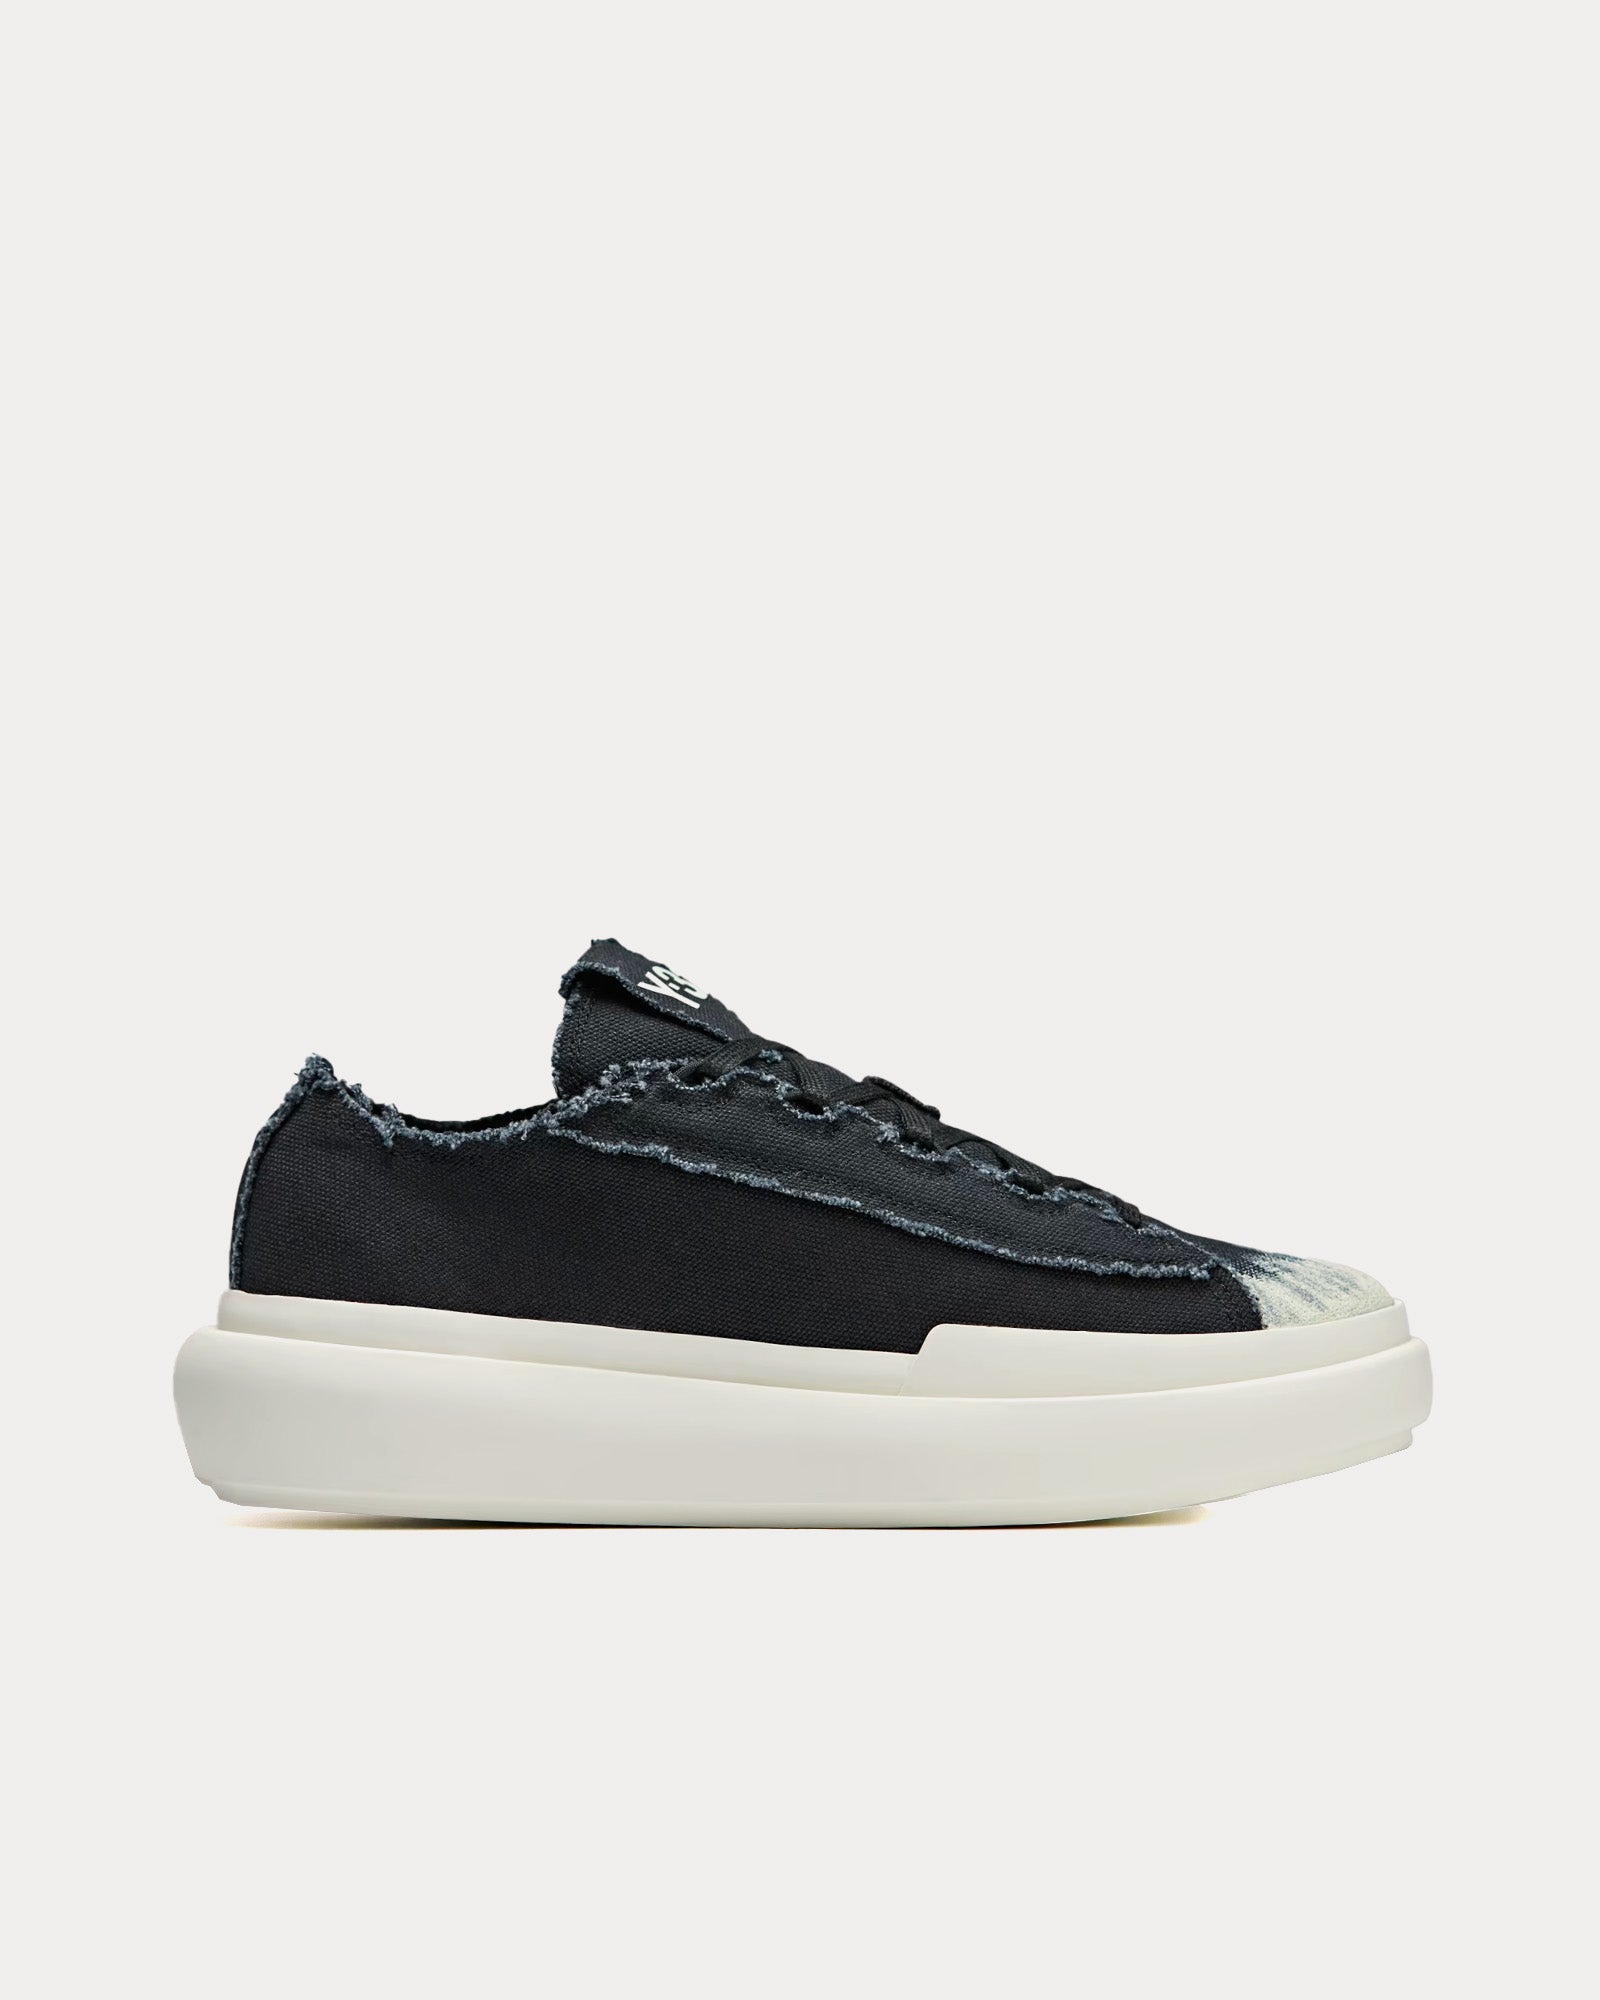 Y-3 - Nizza Low Black / Black / Off White Low Top Sneakers